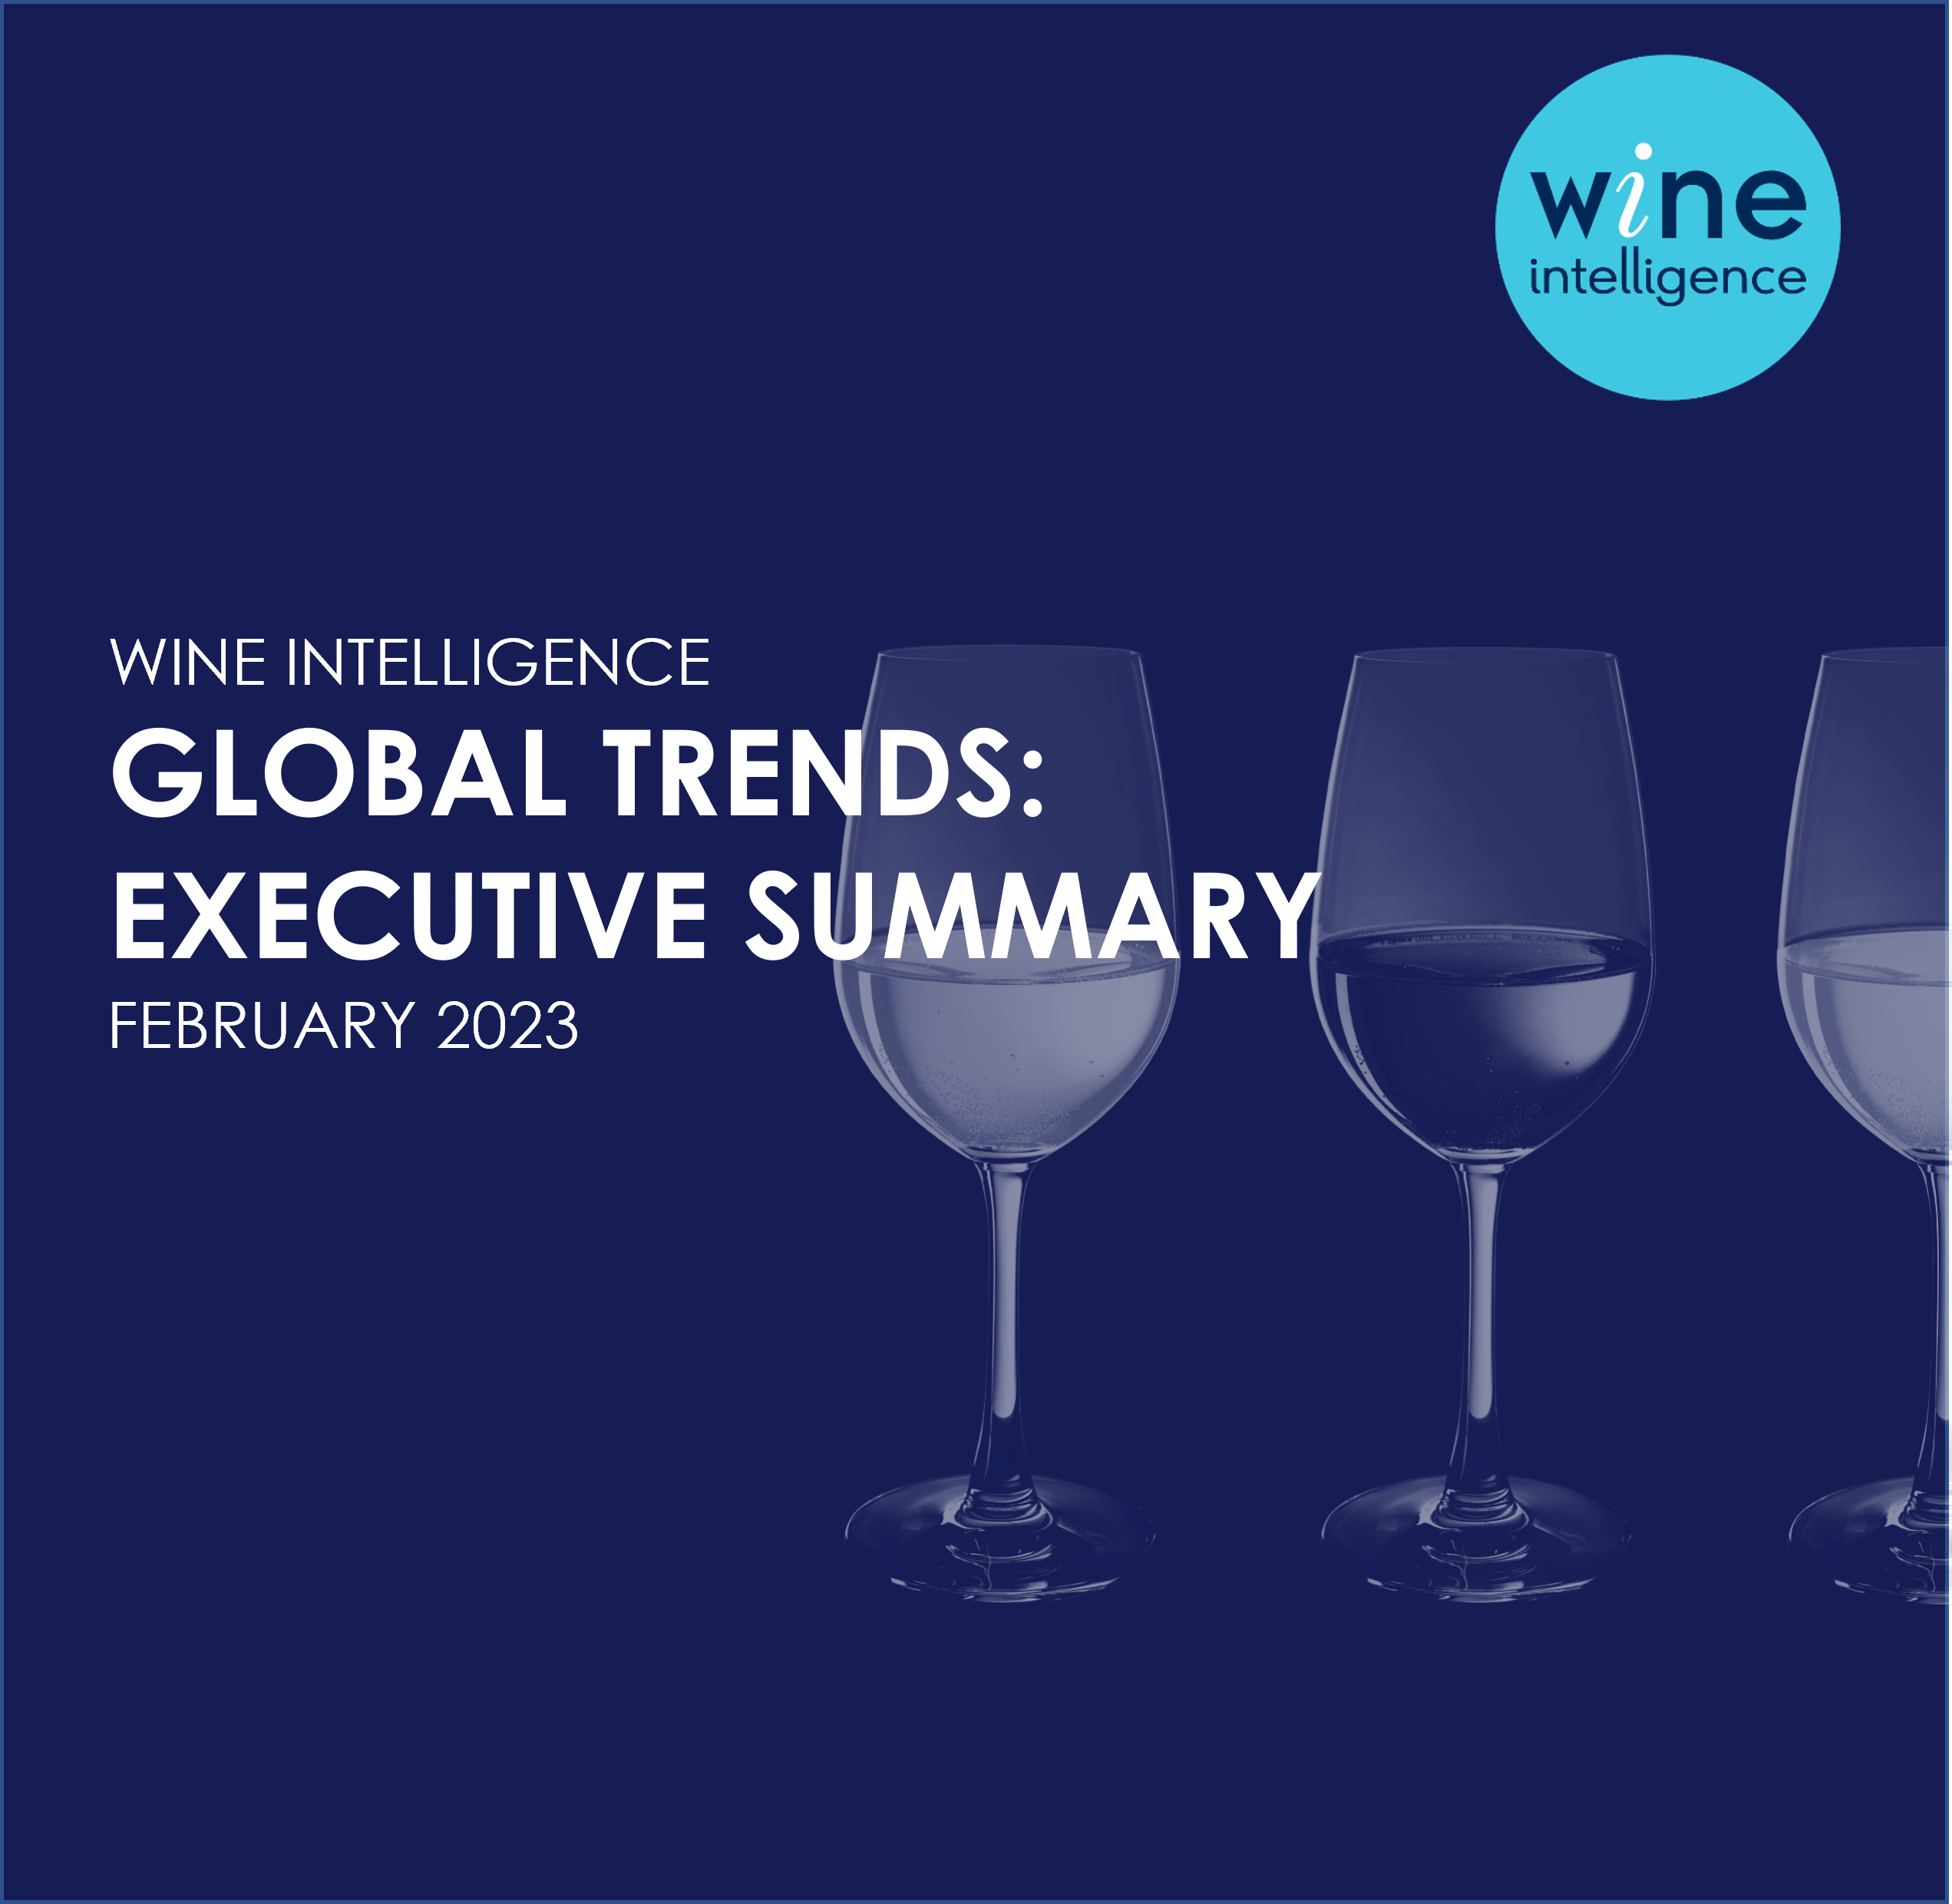 Global Trends Execuitve Summary 2022 - Global Trends: Executive Summary